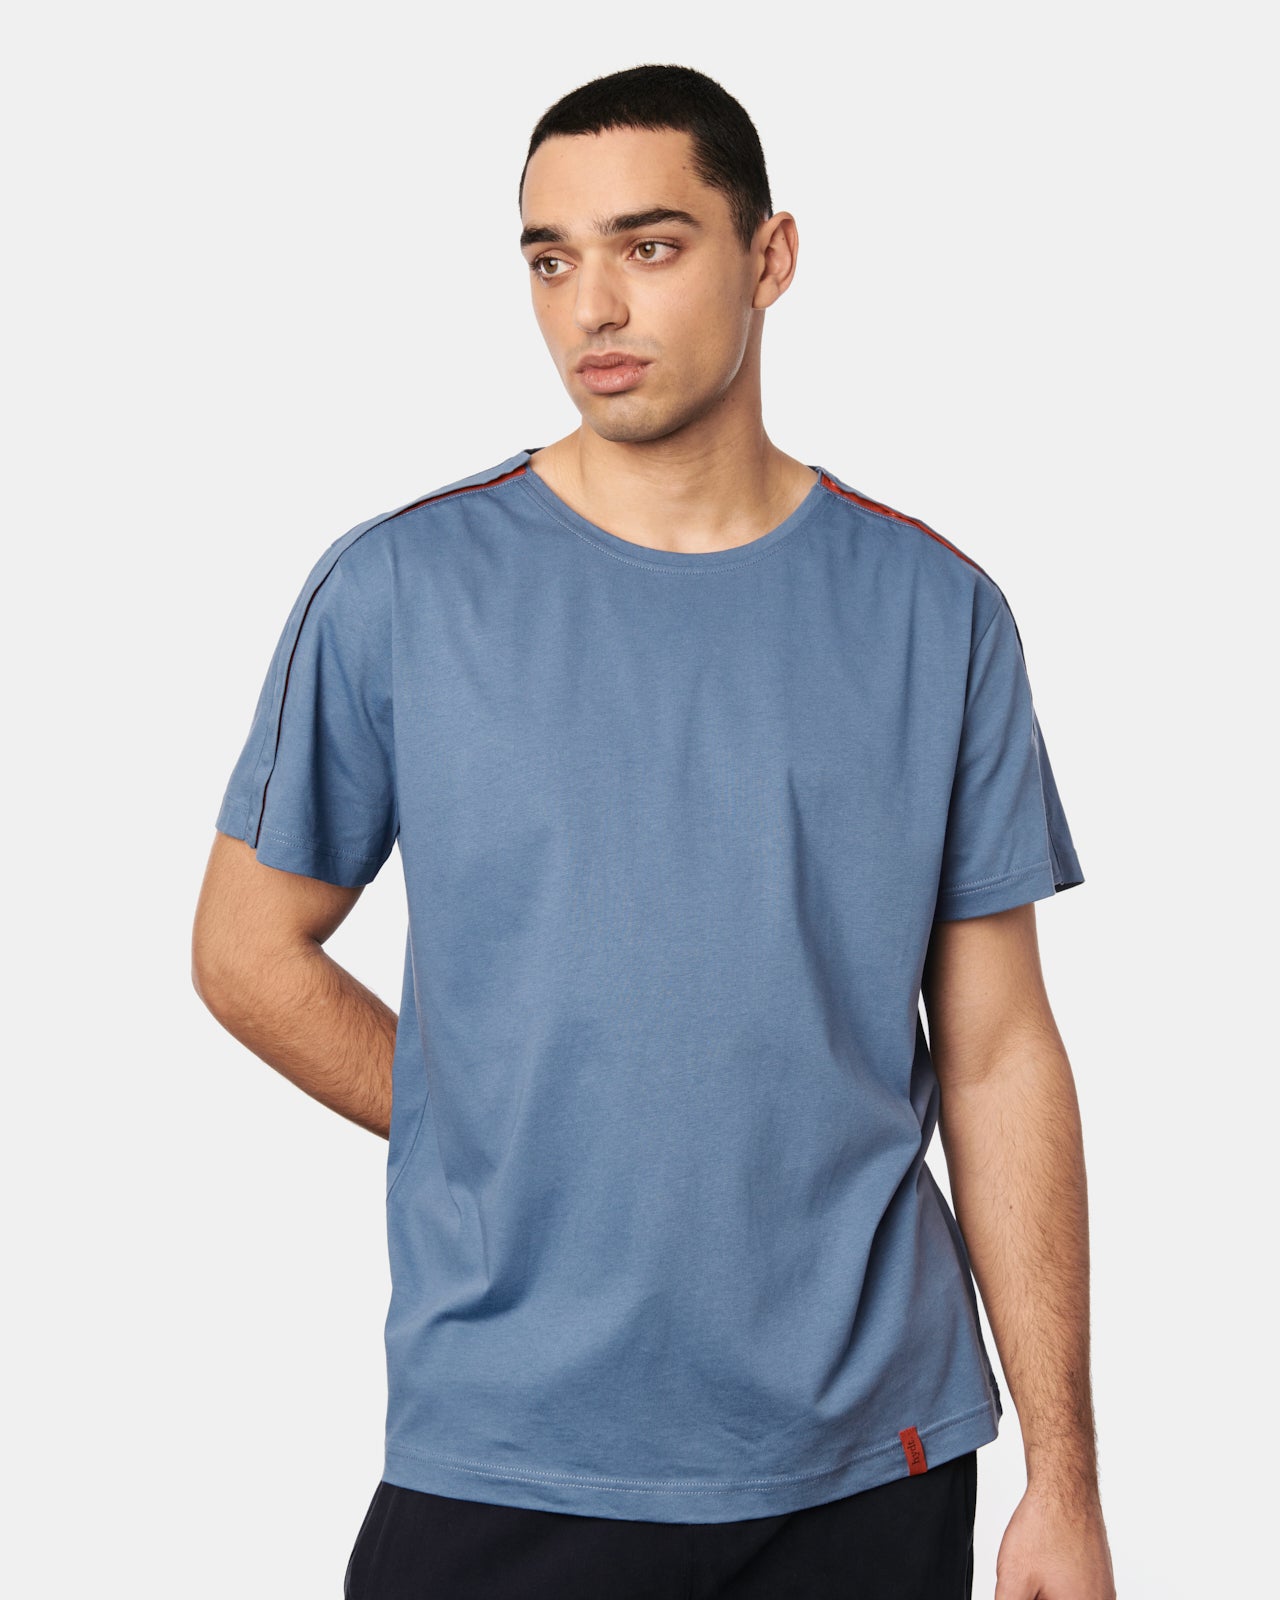 Das Herren T-Shirt Bent in der Farbe Finian Blue.